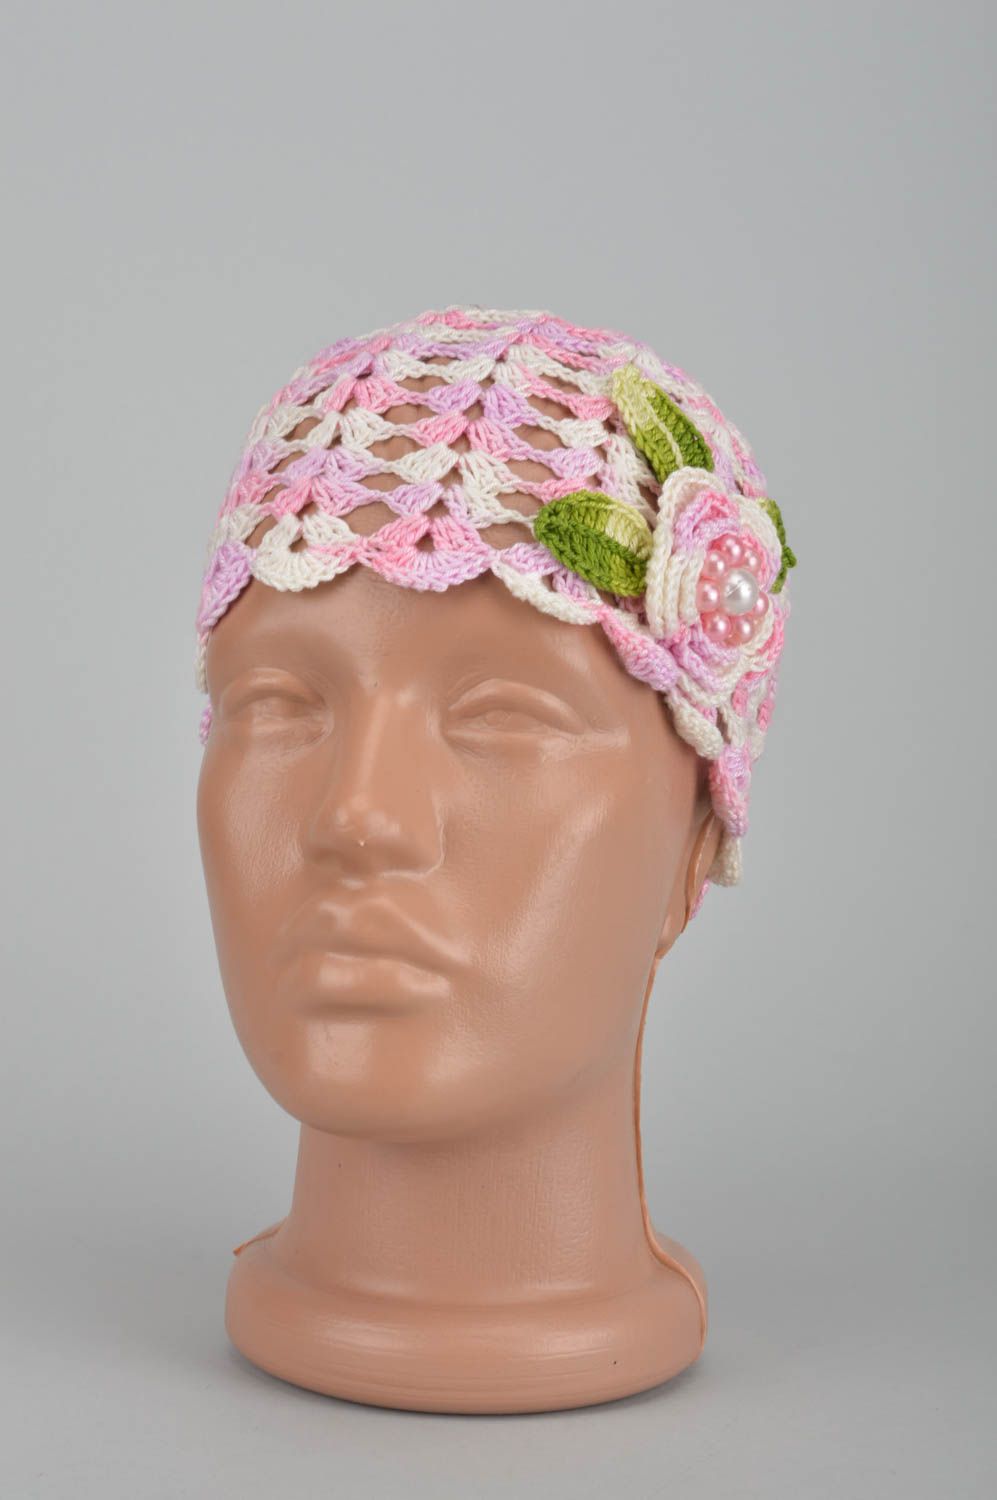 Beautiful handmade crochet hat cute hats crochet ideas designer accessories photo 1